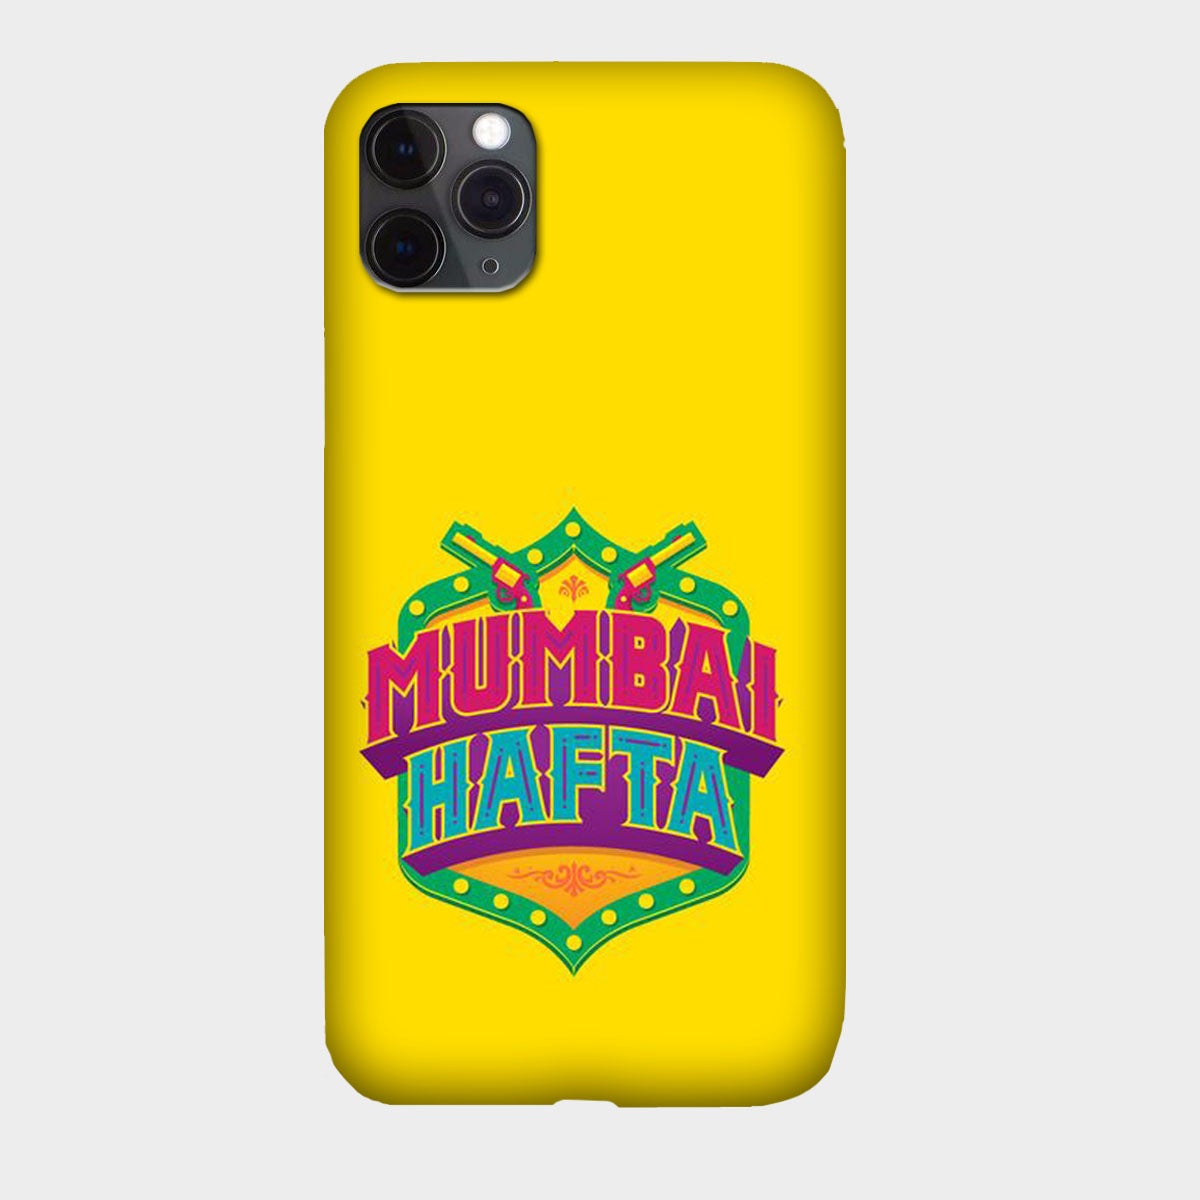 Mumbai Hafta - Mobile Phone Cover - Hard Case